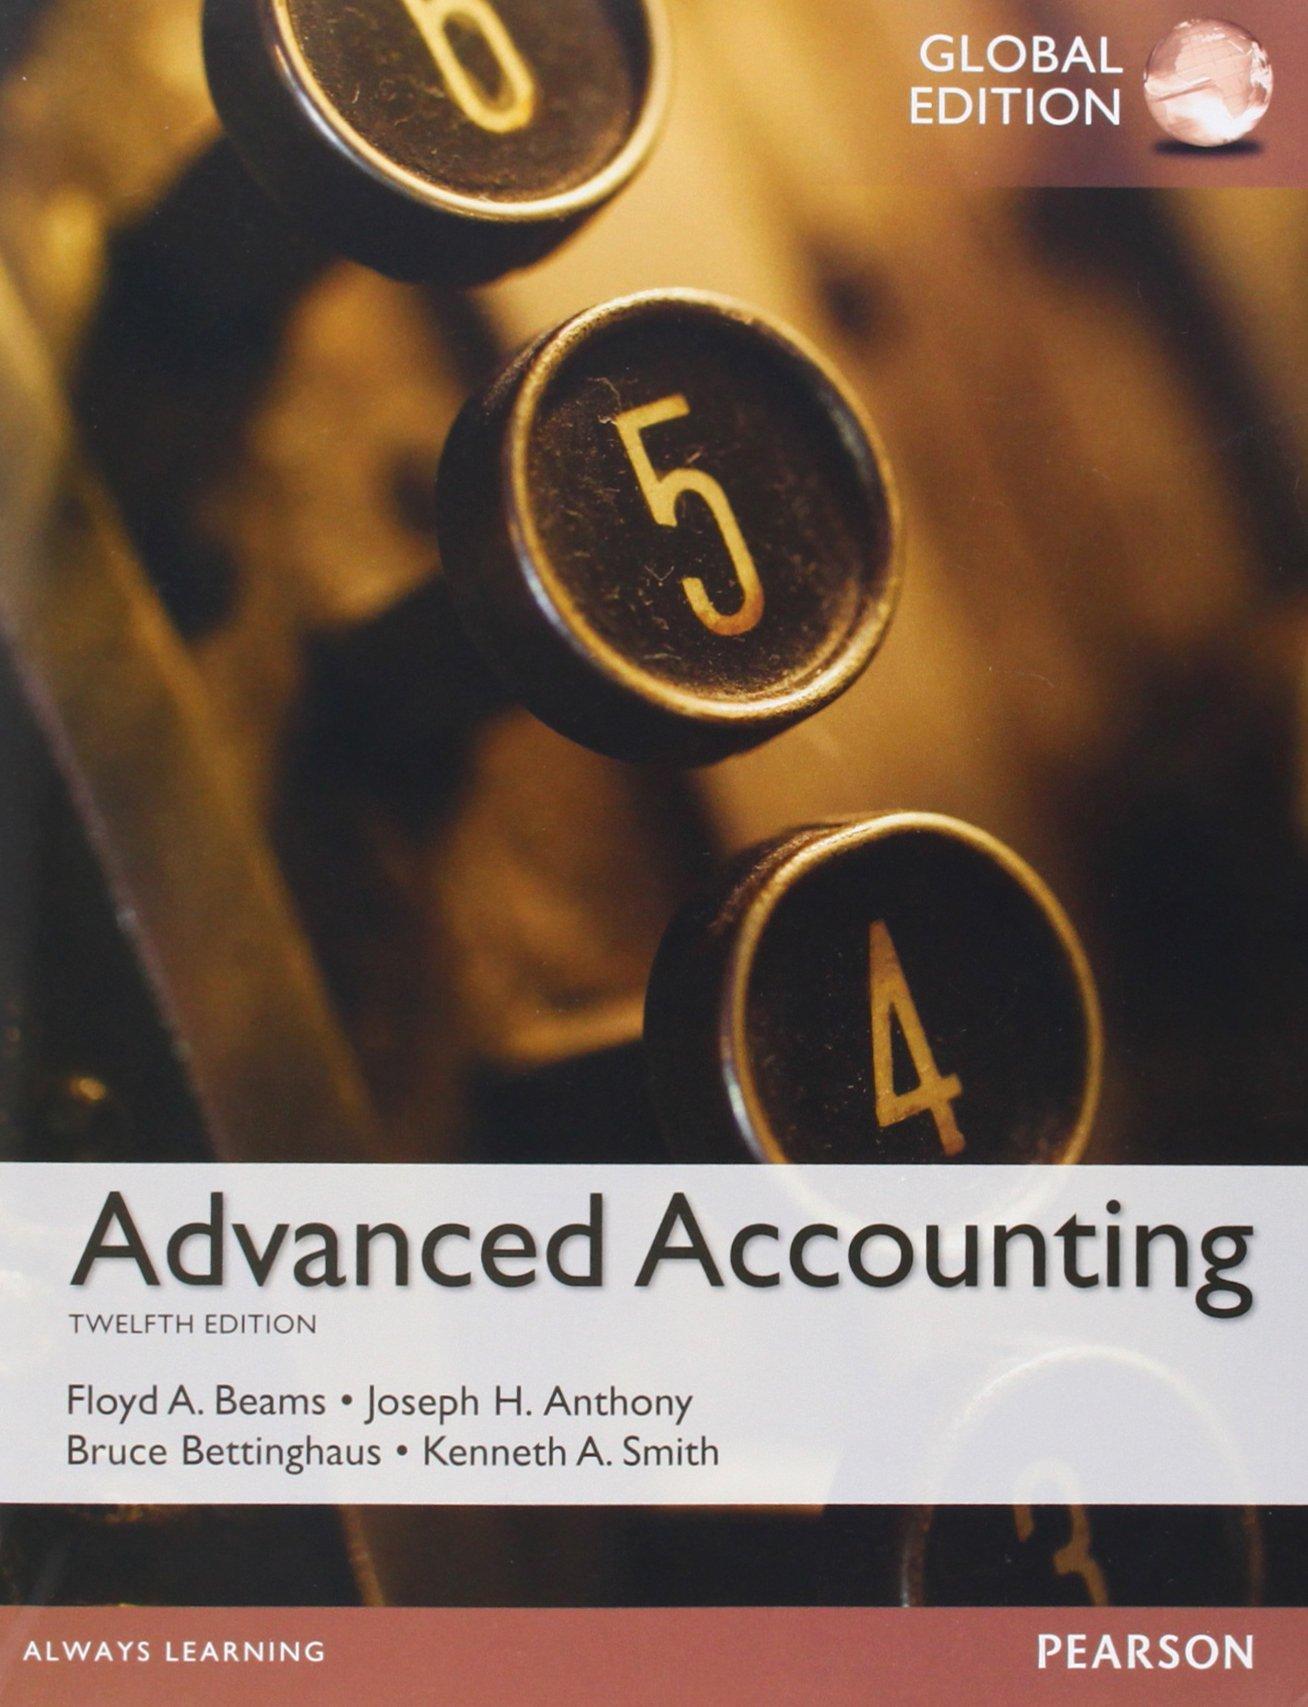 advanced accounting 12th global edition kenneth smith, floyd beams, joseph anthony, bruce bettinghaus